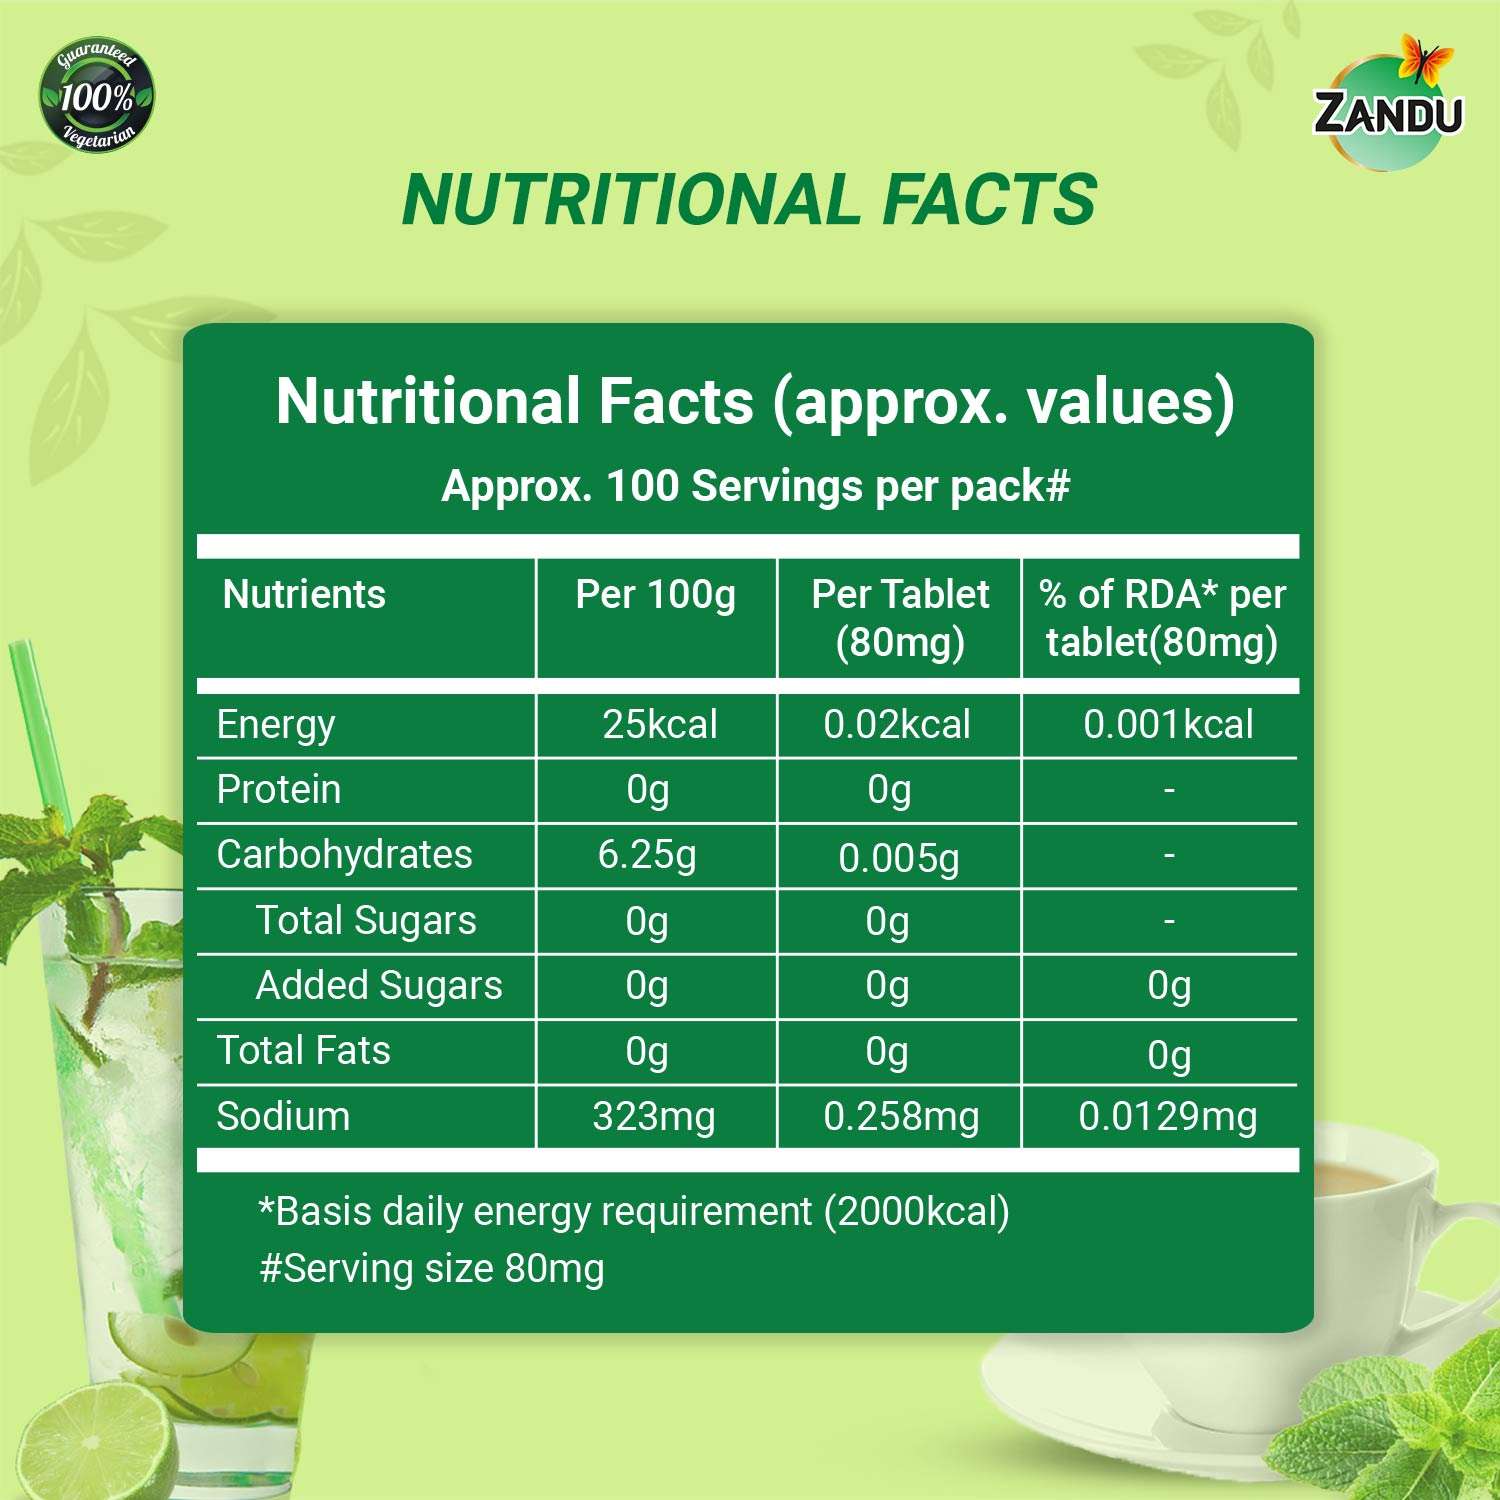 Stevia (Meethi Tulsi) Sugar Free Tablets -  Zero Calorie Sugar Alternative (8g -100N)